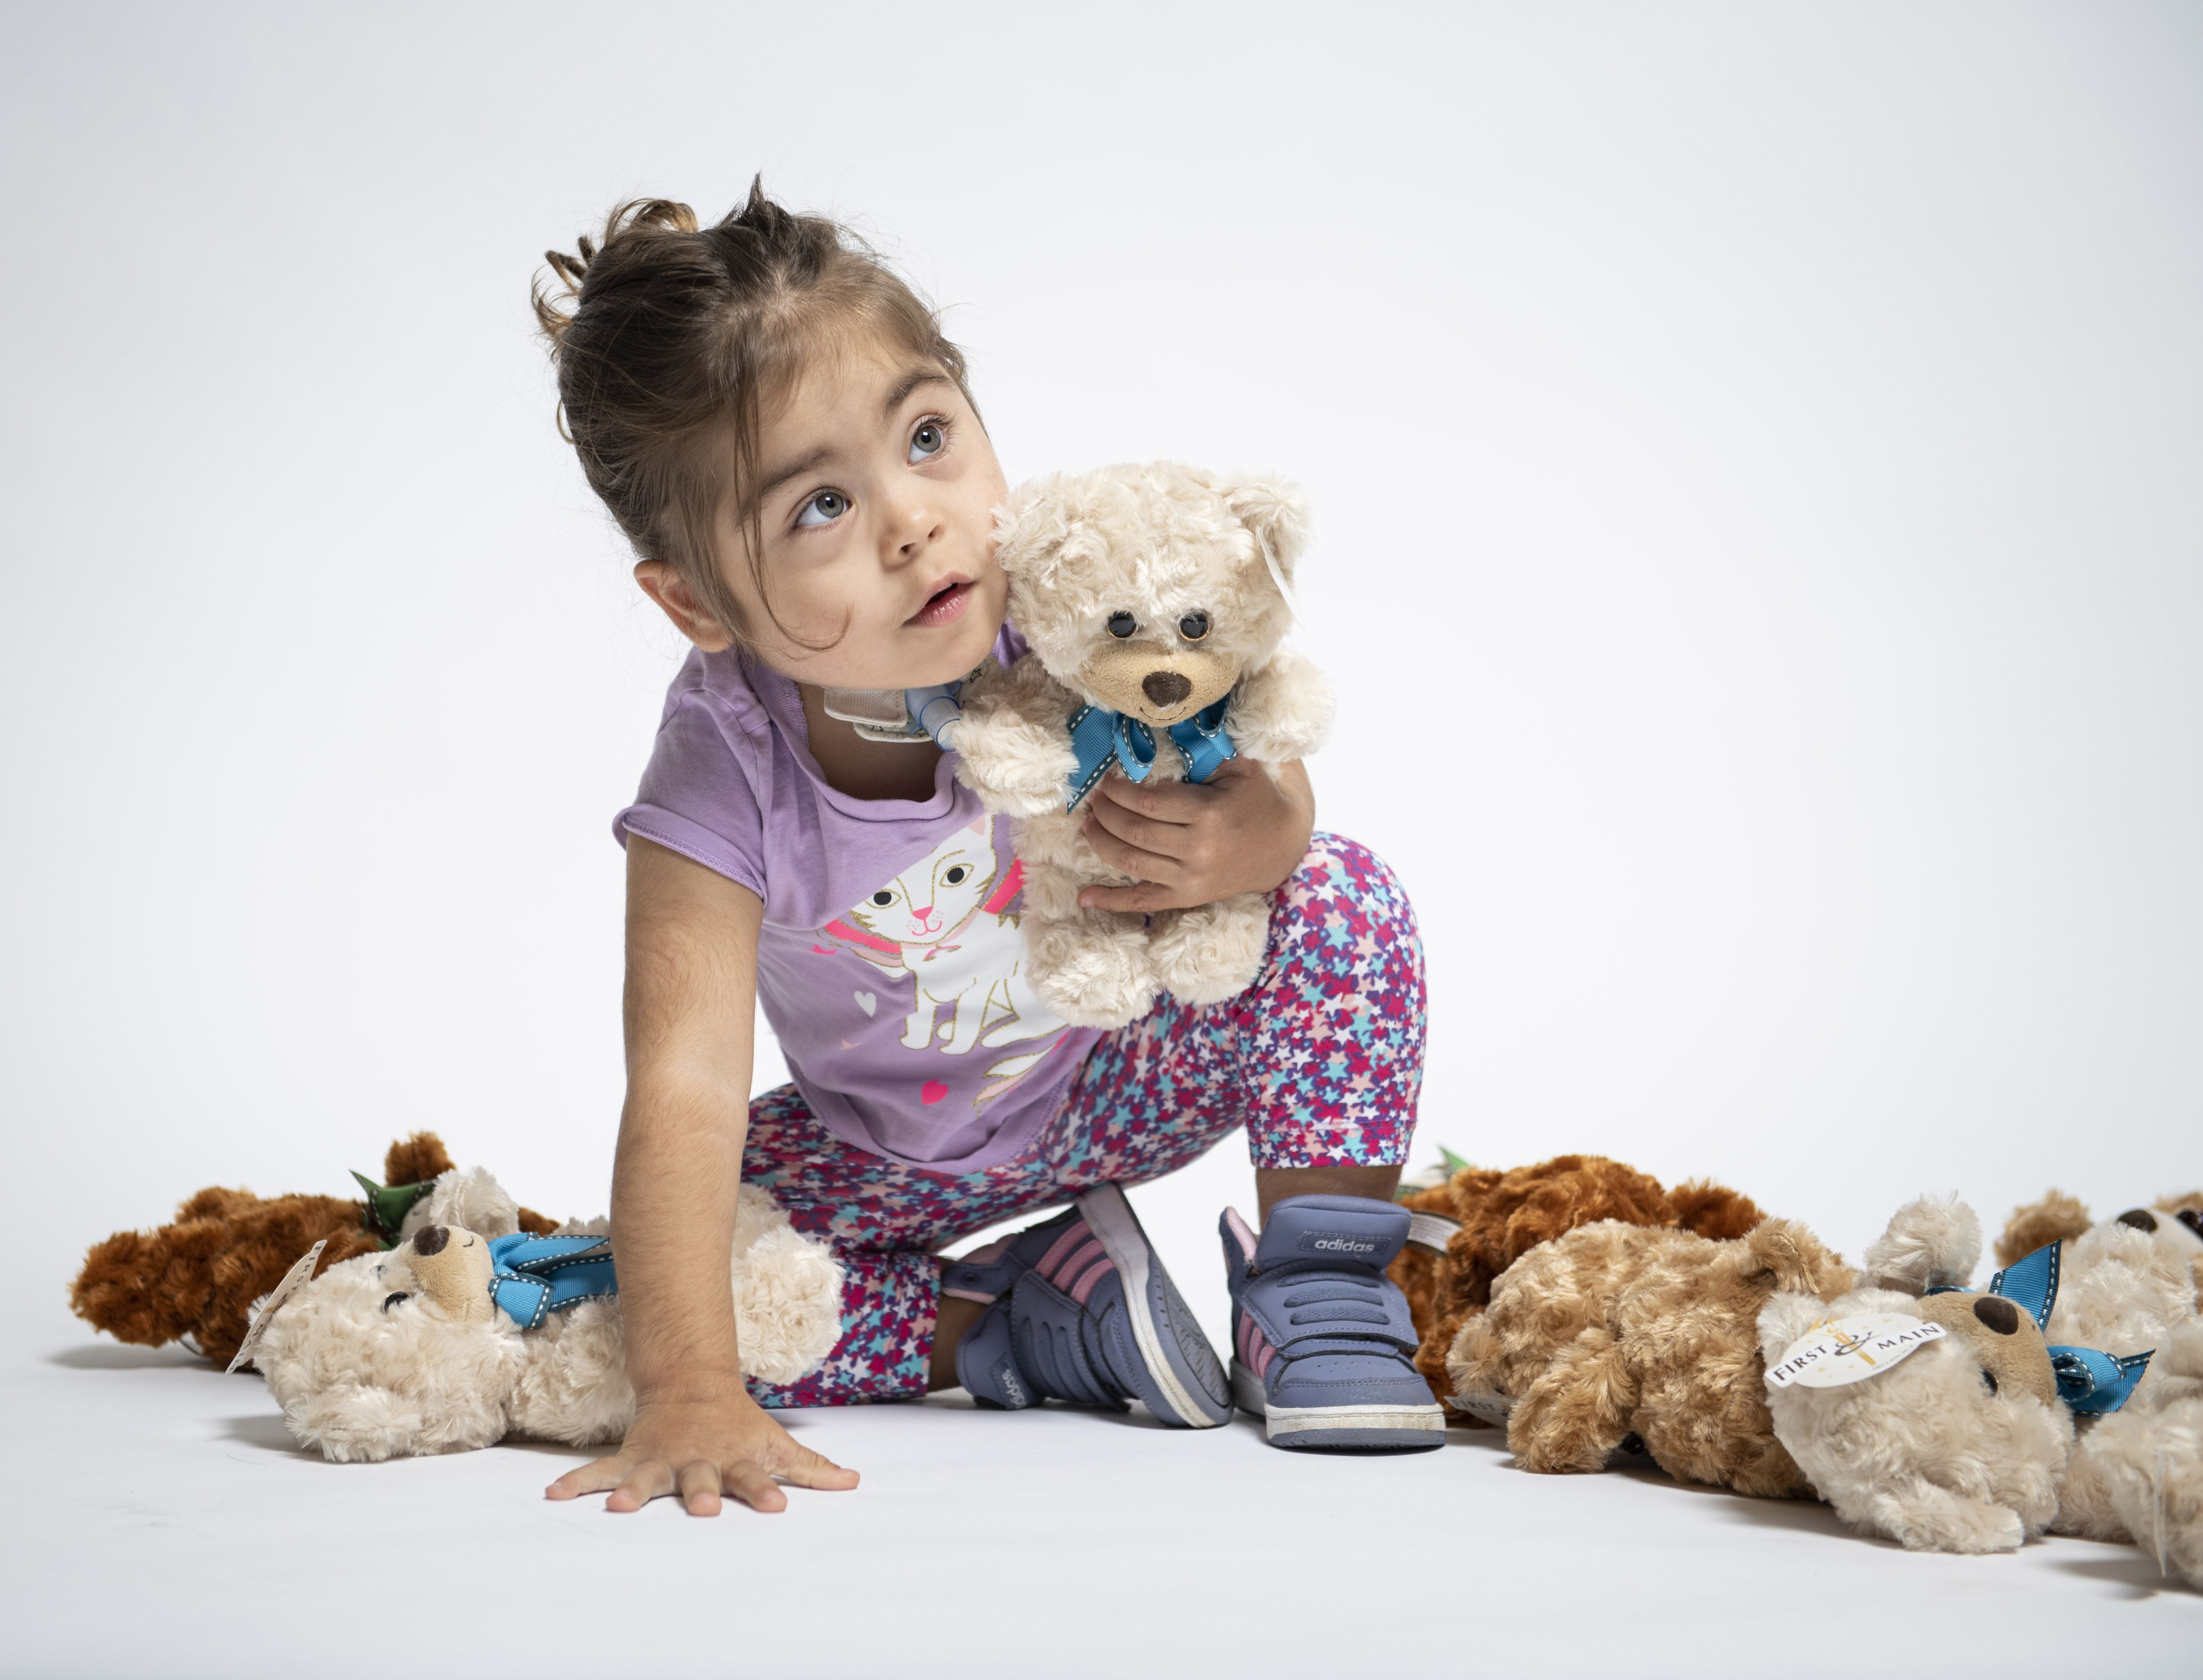 Athena with teddy bears